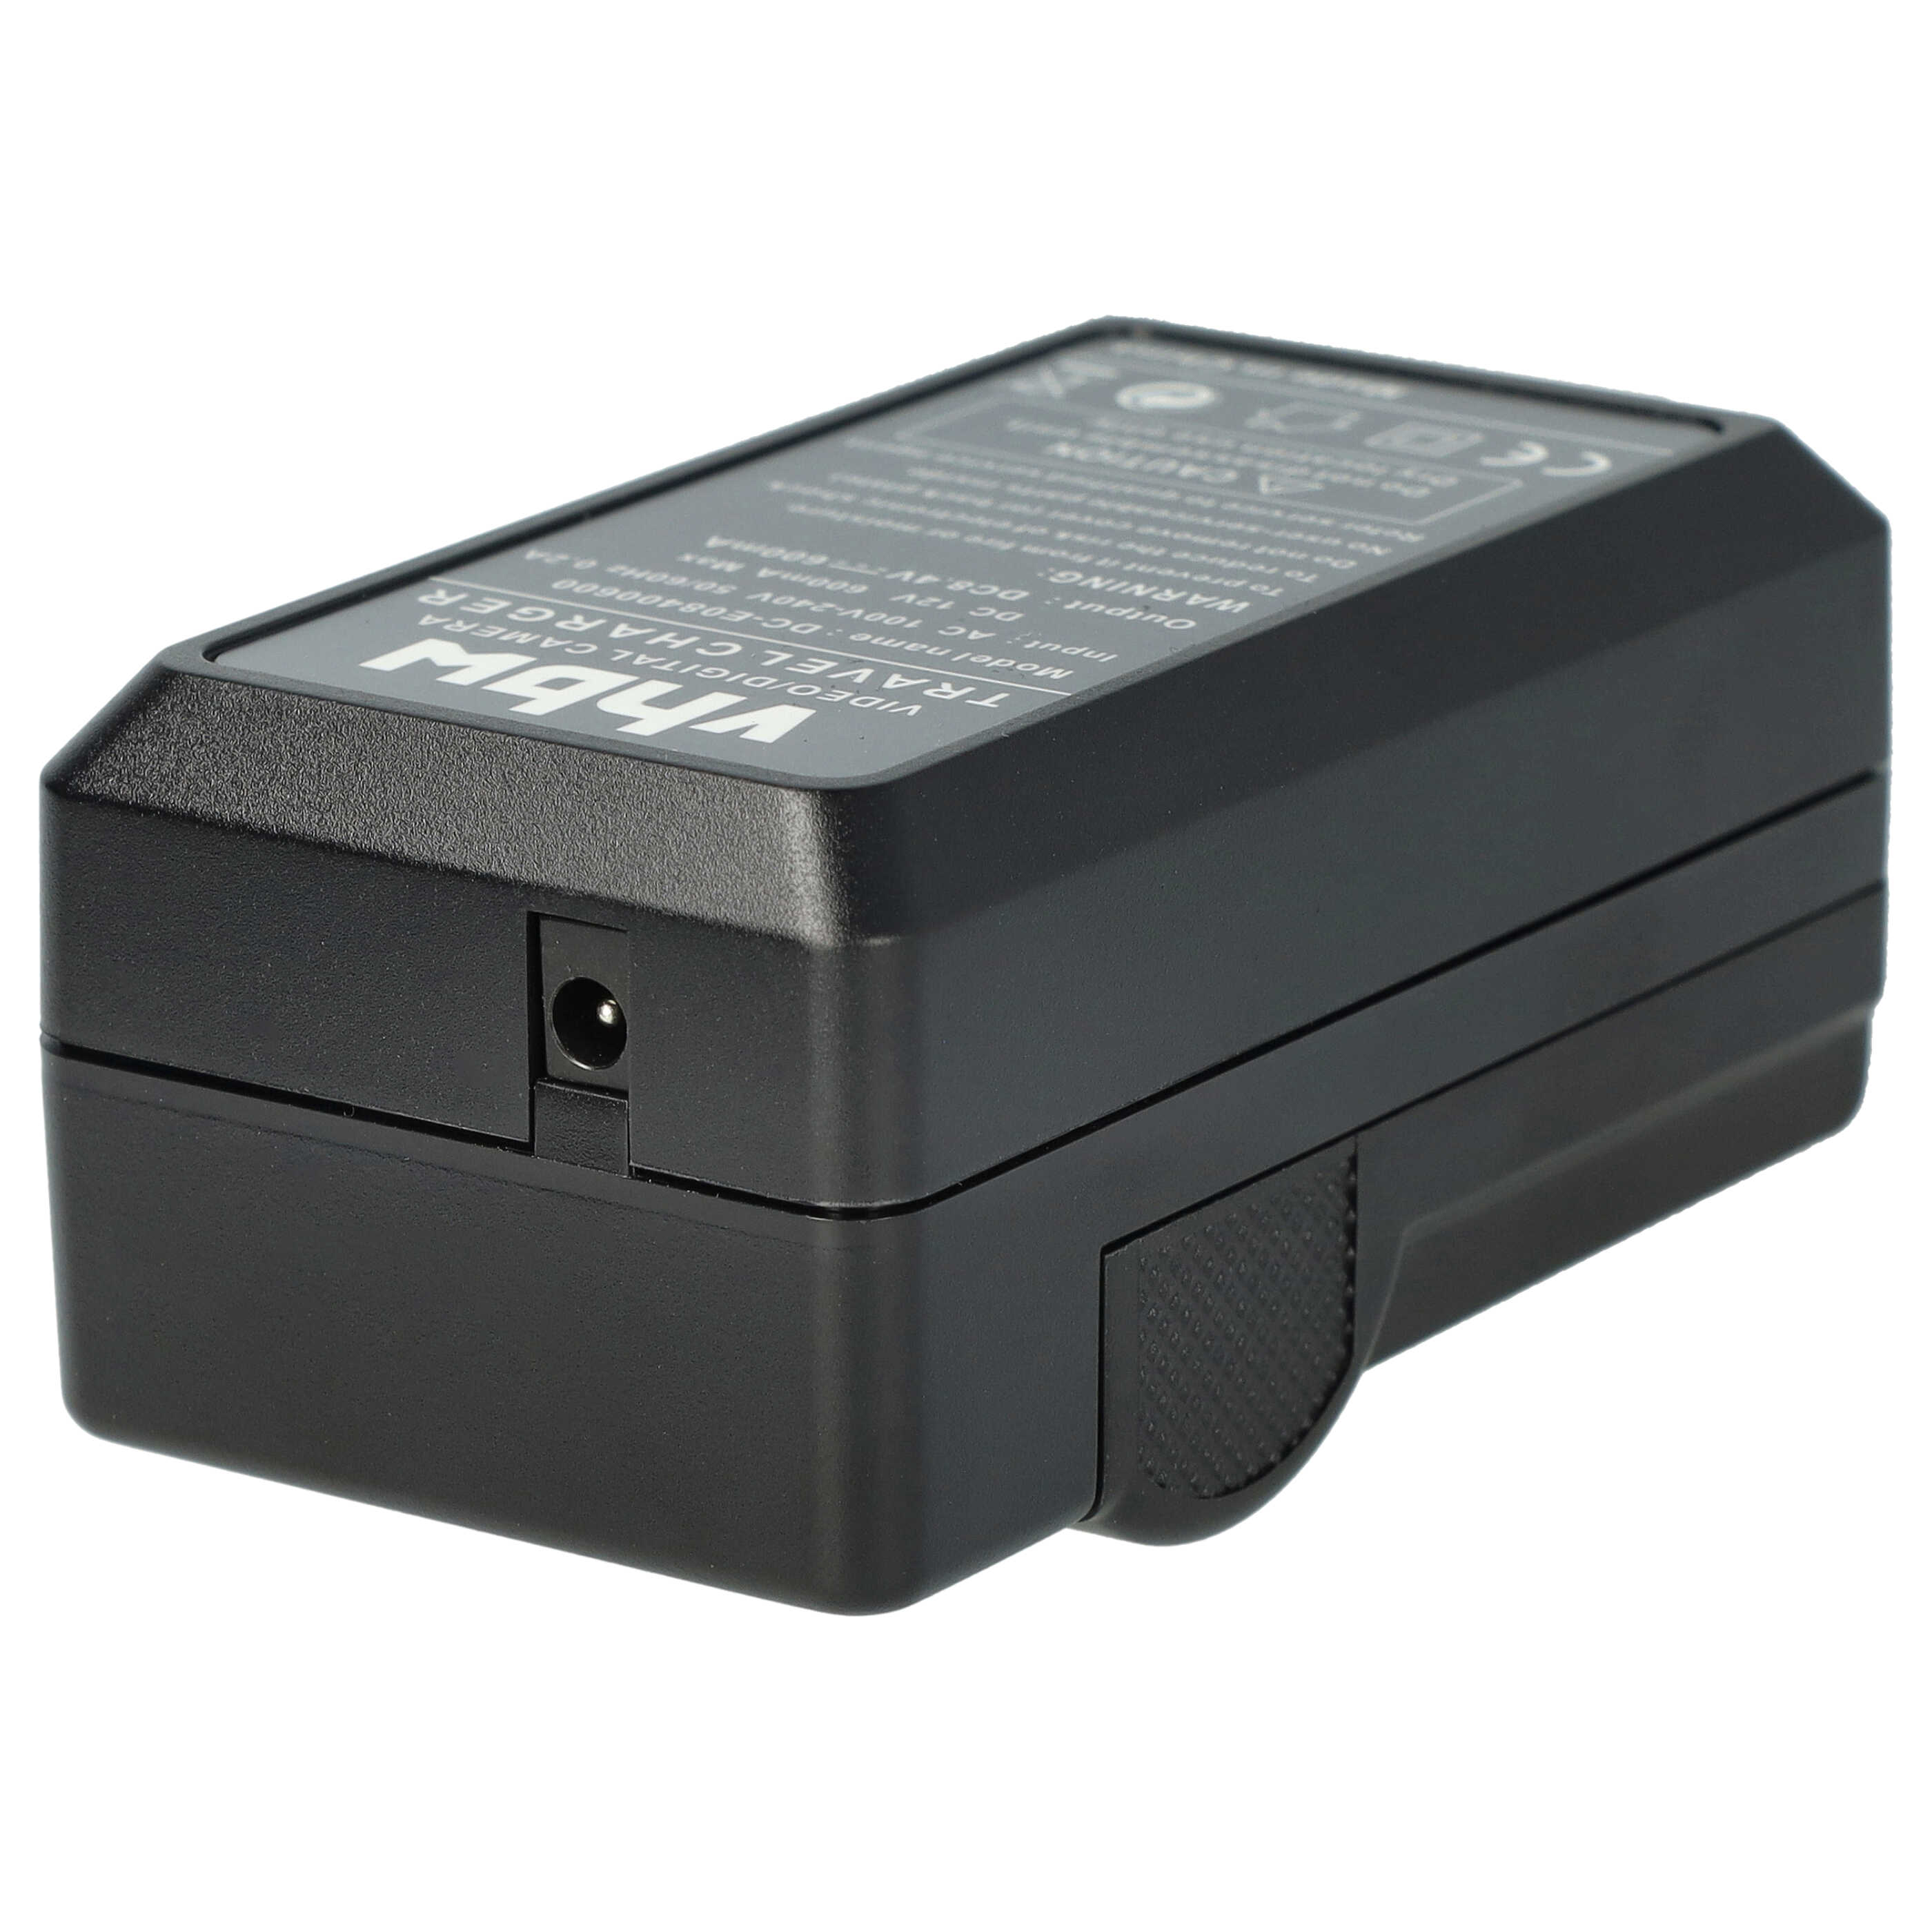 Battery Charger suitable for Samsung SB-LSM160 Camera etc. - 0.6 A, 8.4 V